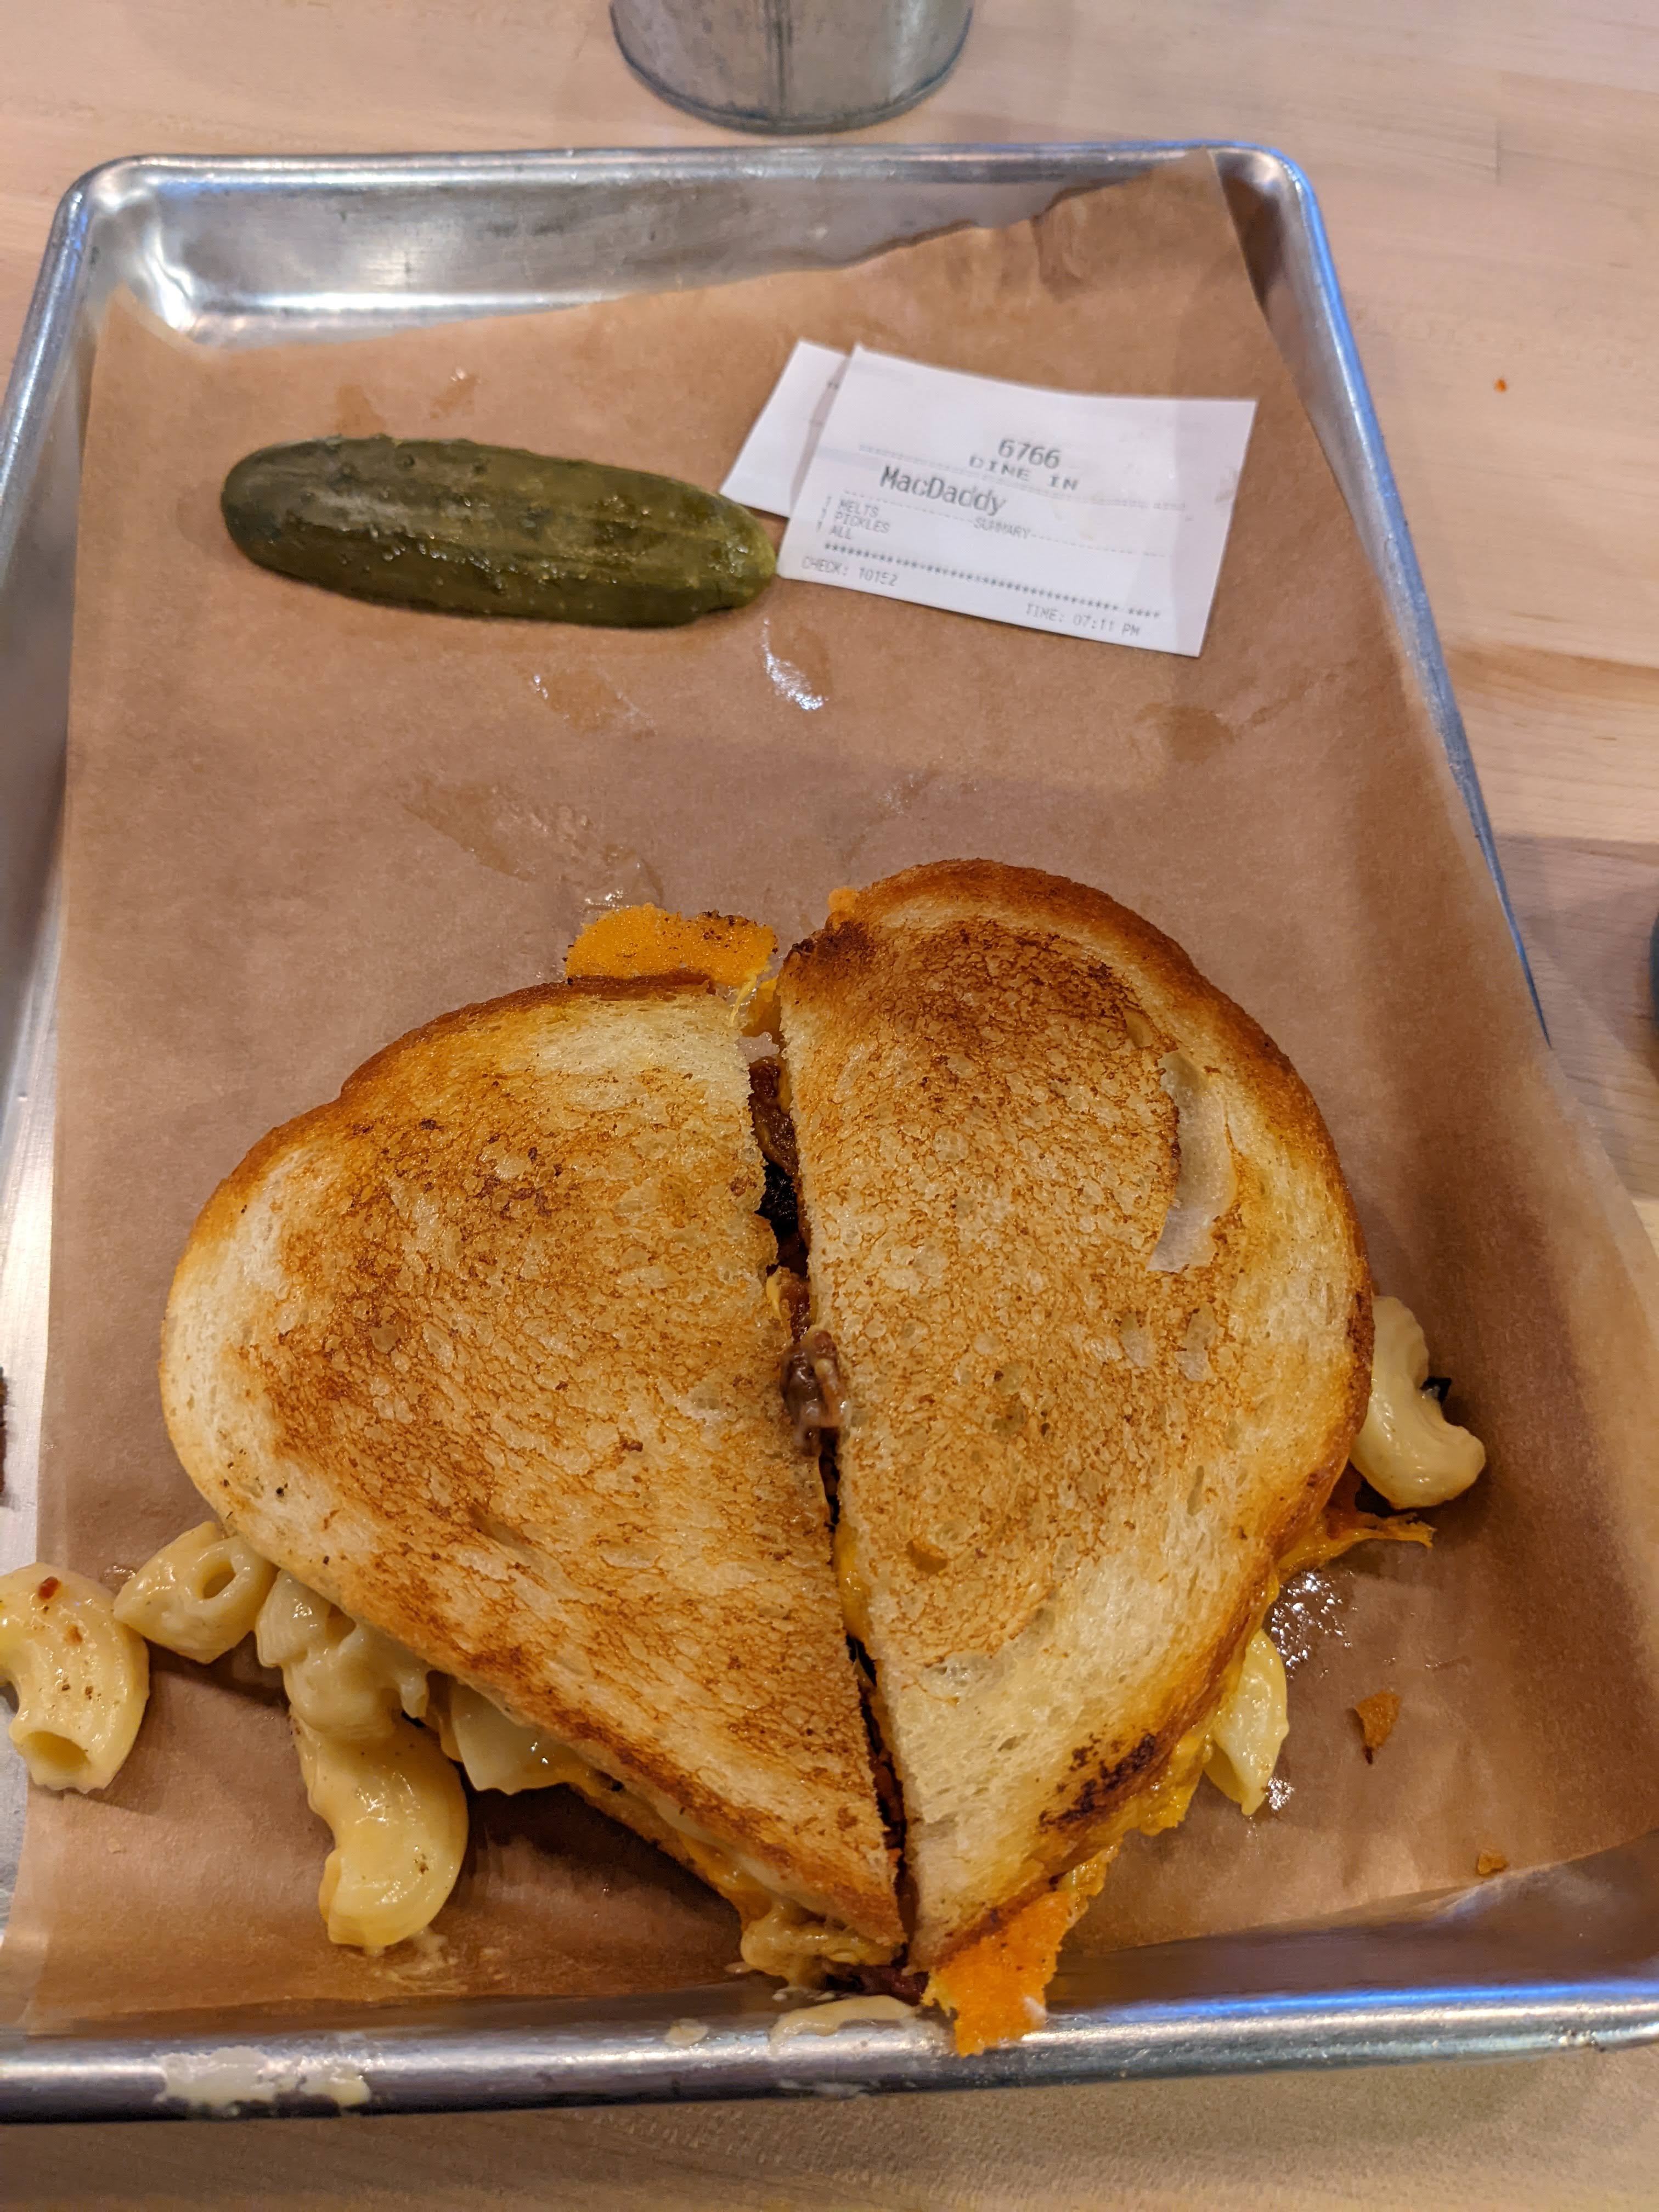 A Mac Daddy sandwich from The Melt.